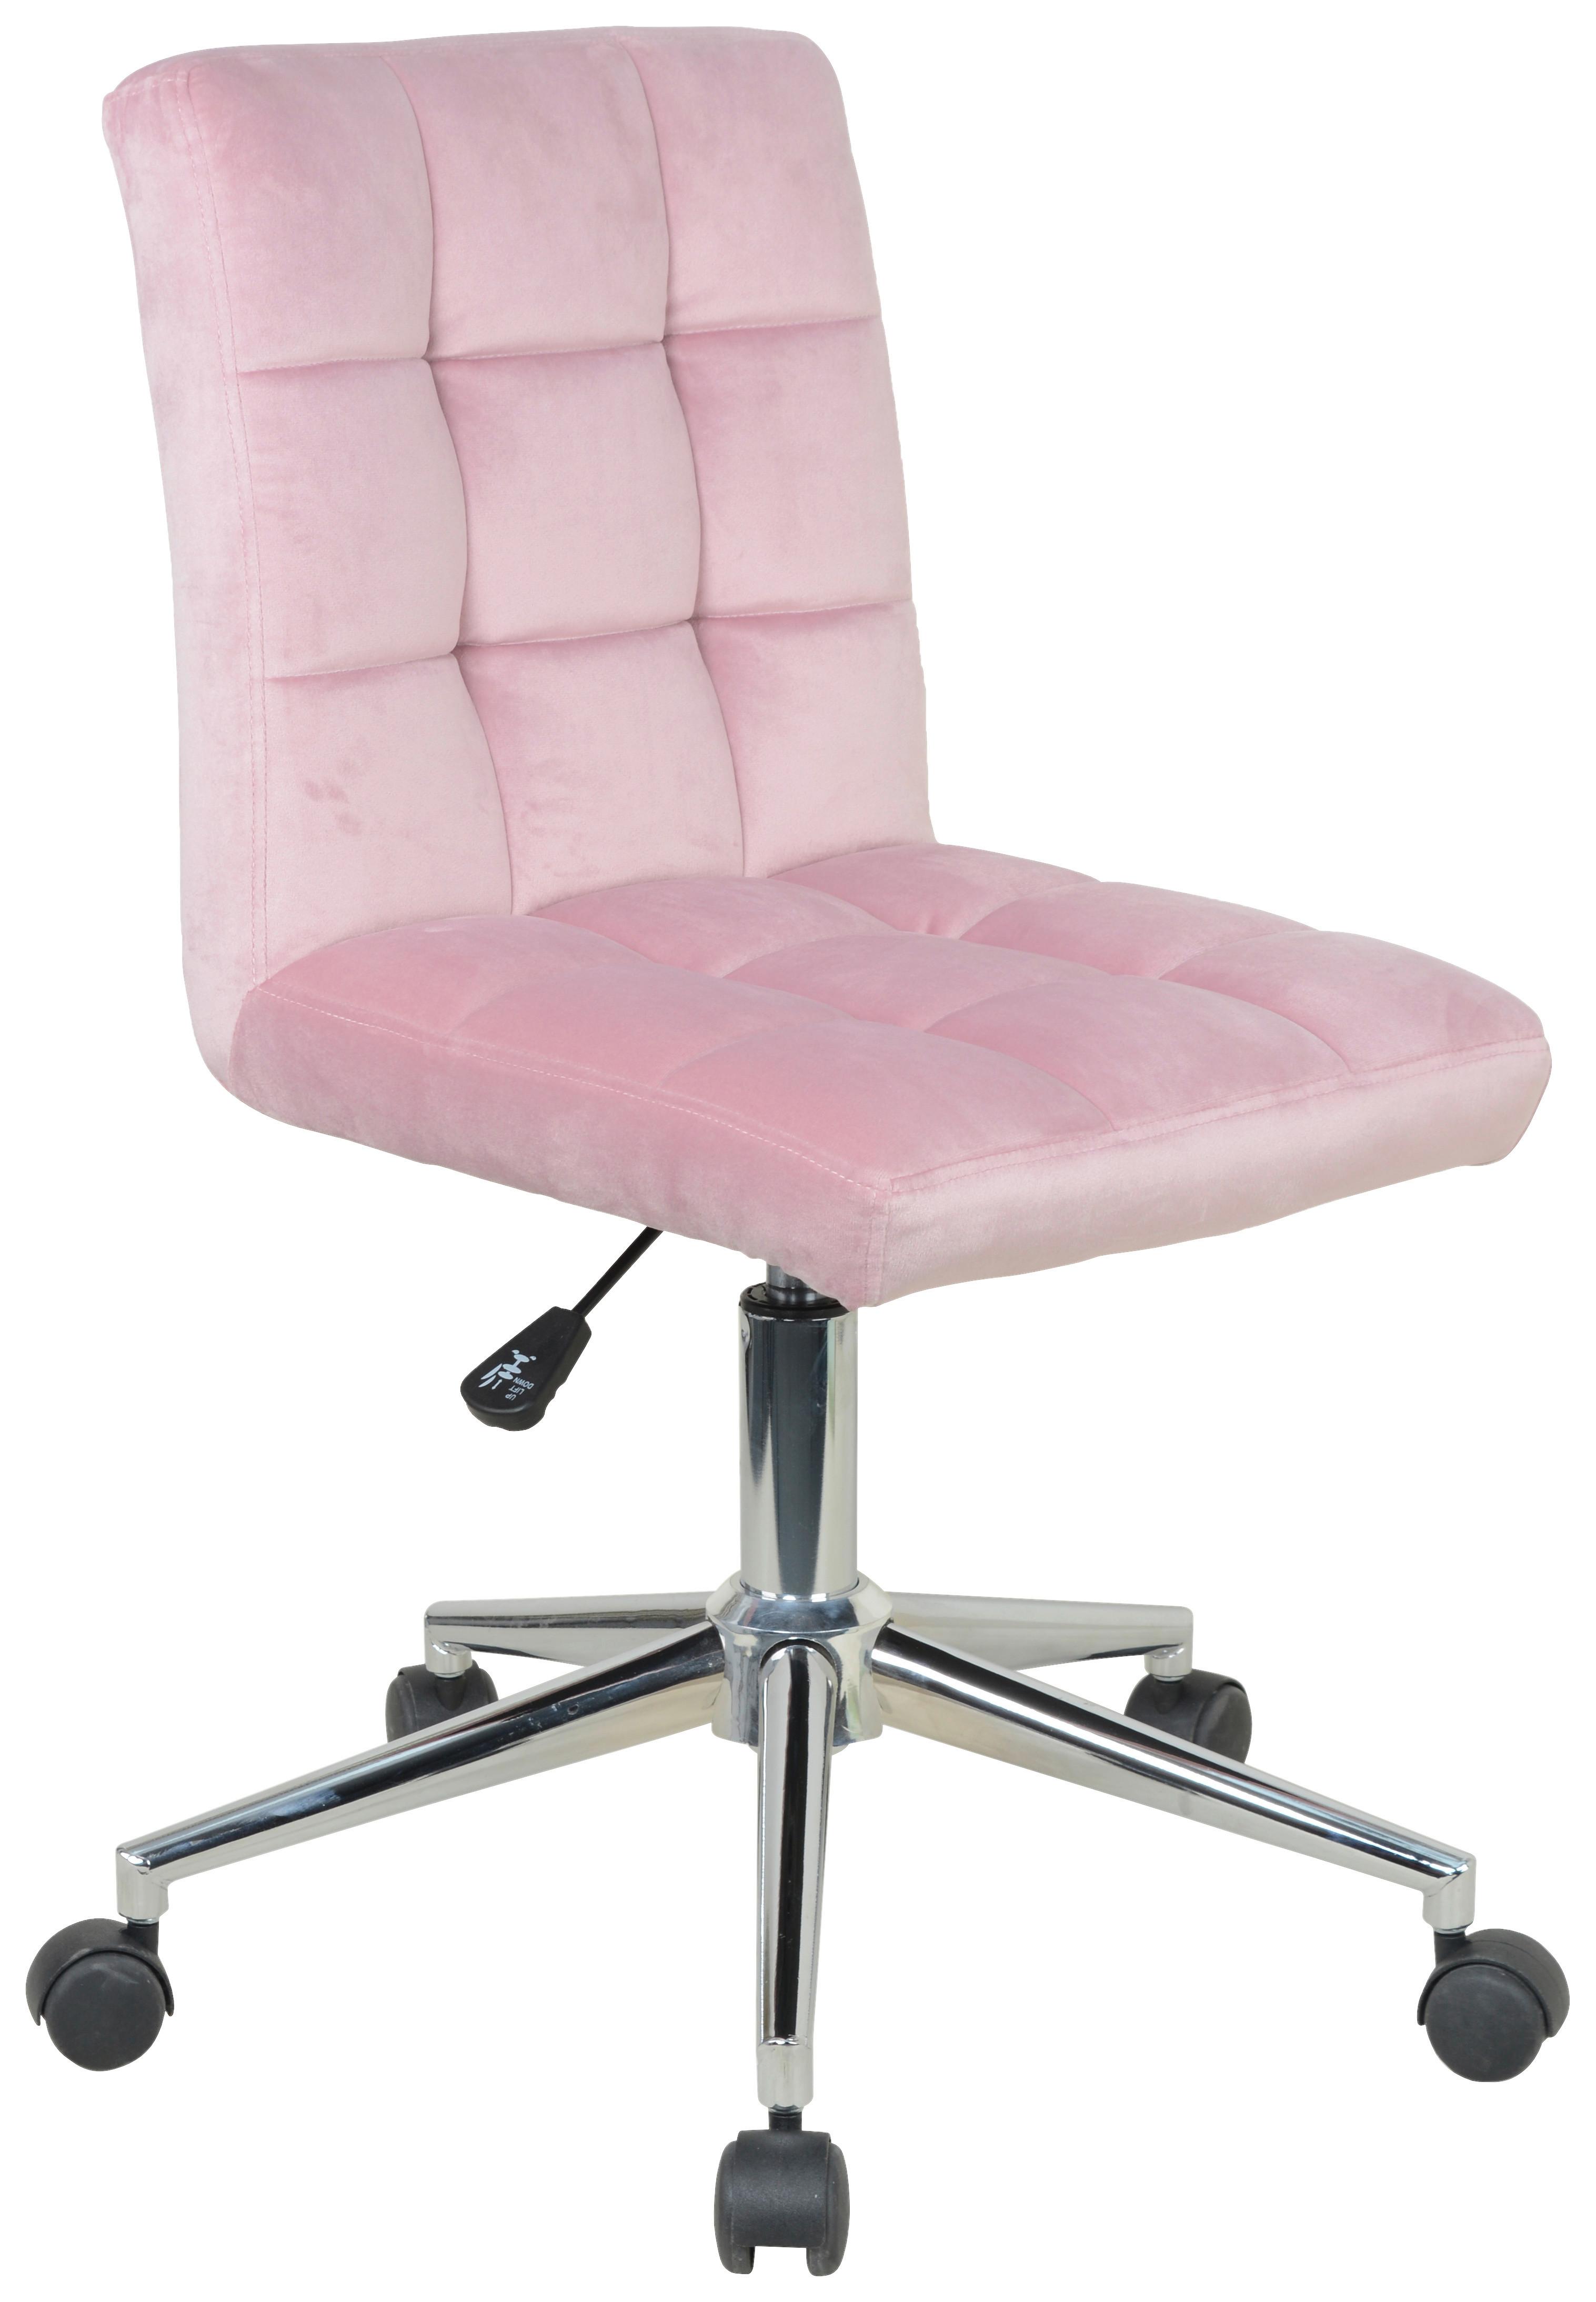 Stolica Uredska Easy - pink/ružičasta, Modern, drvo/metal (41/79,5-89/54cm) - Based